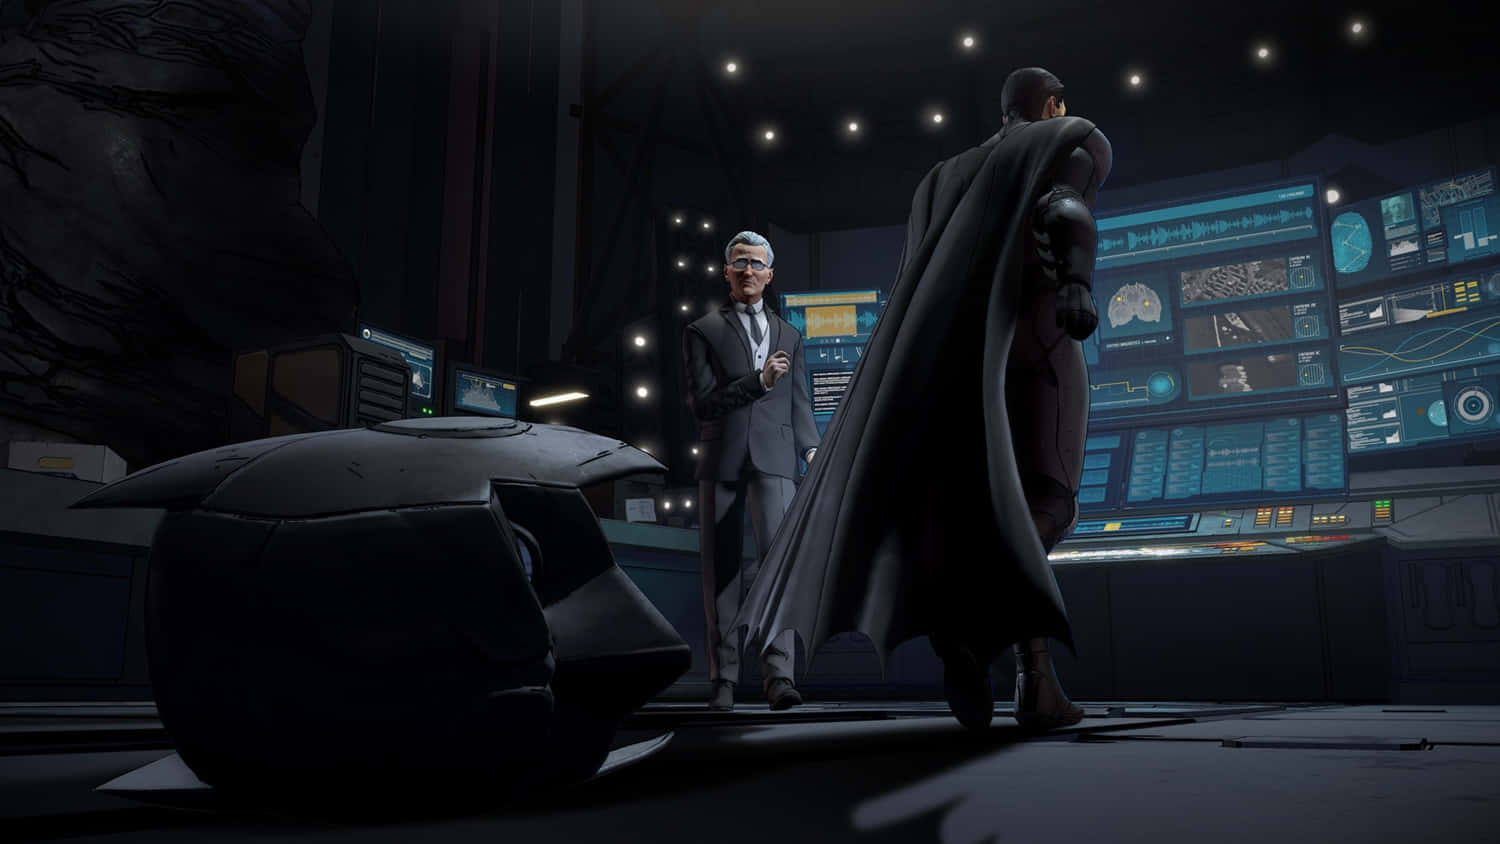 Batman And Alfred In Batcave Wallpaper